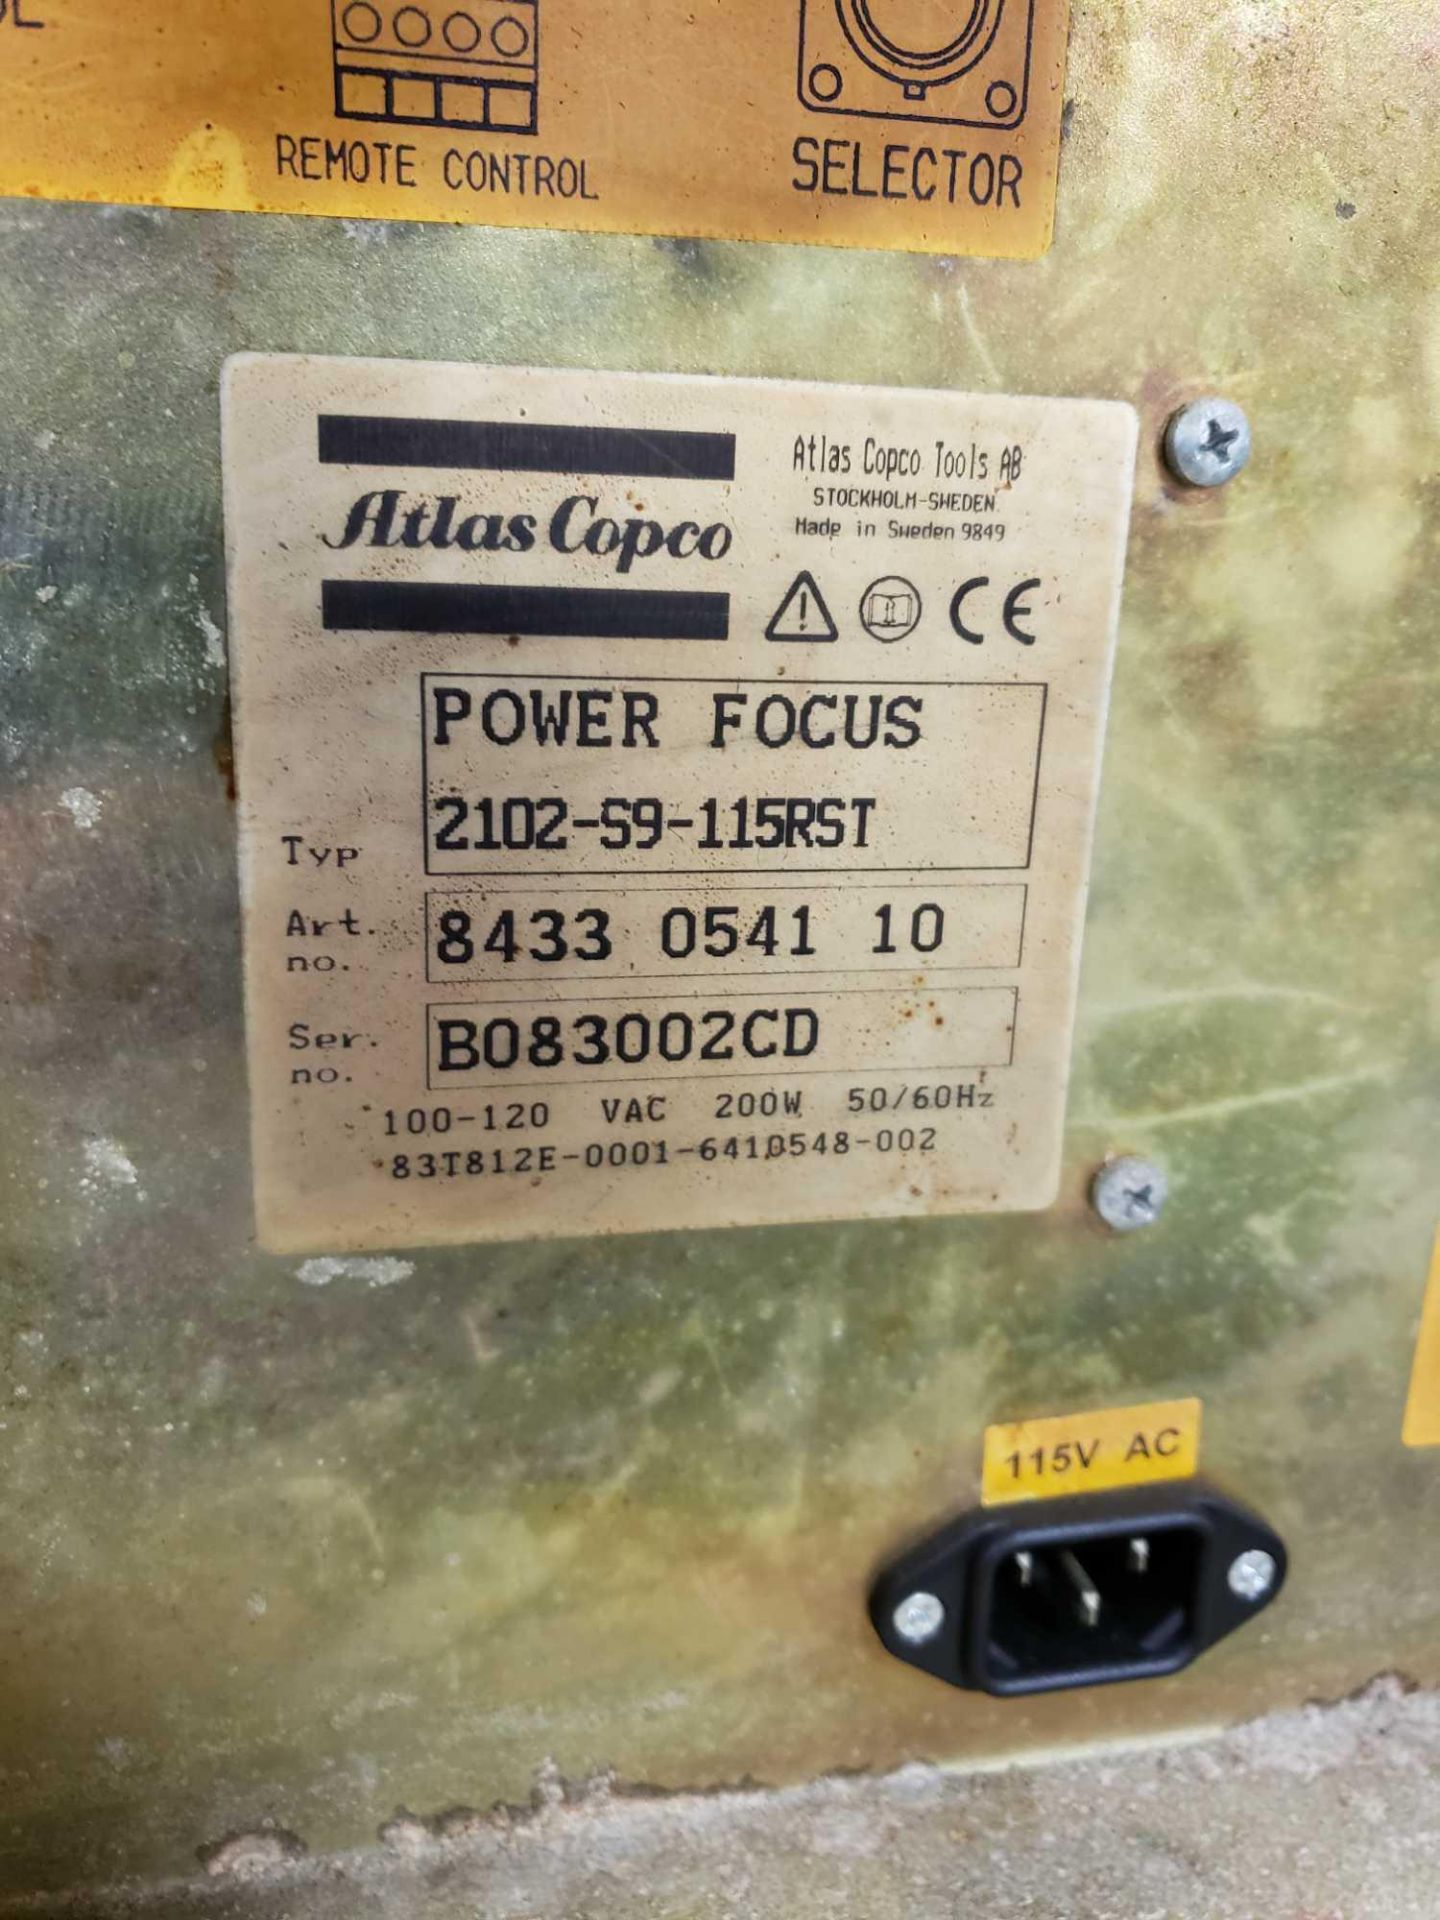 Atlas Copco Power Focus controller. Type 2102-59-115RST. - Image 2 of 3